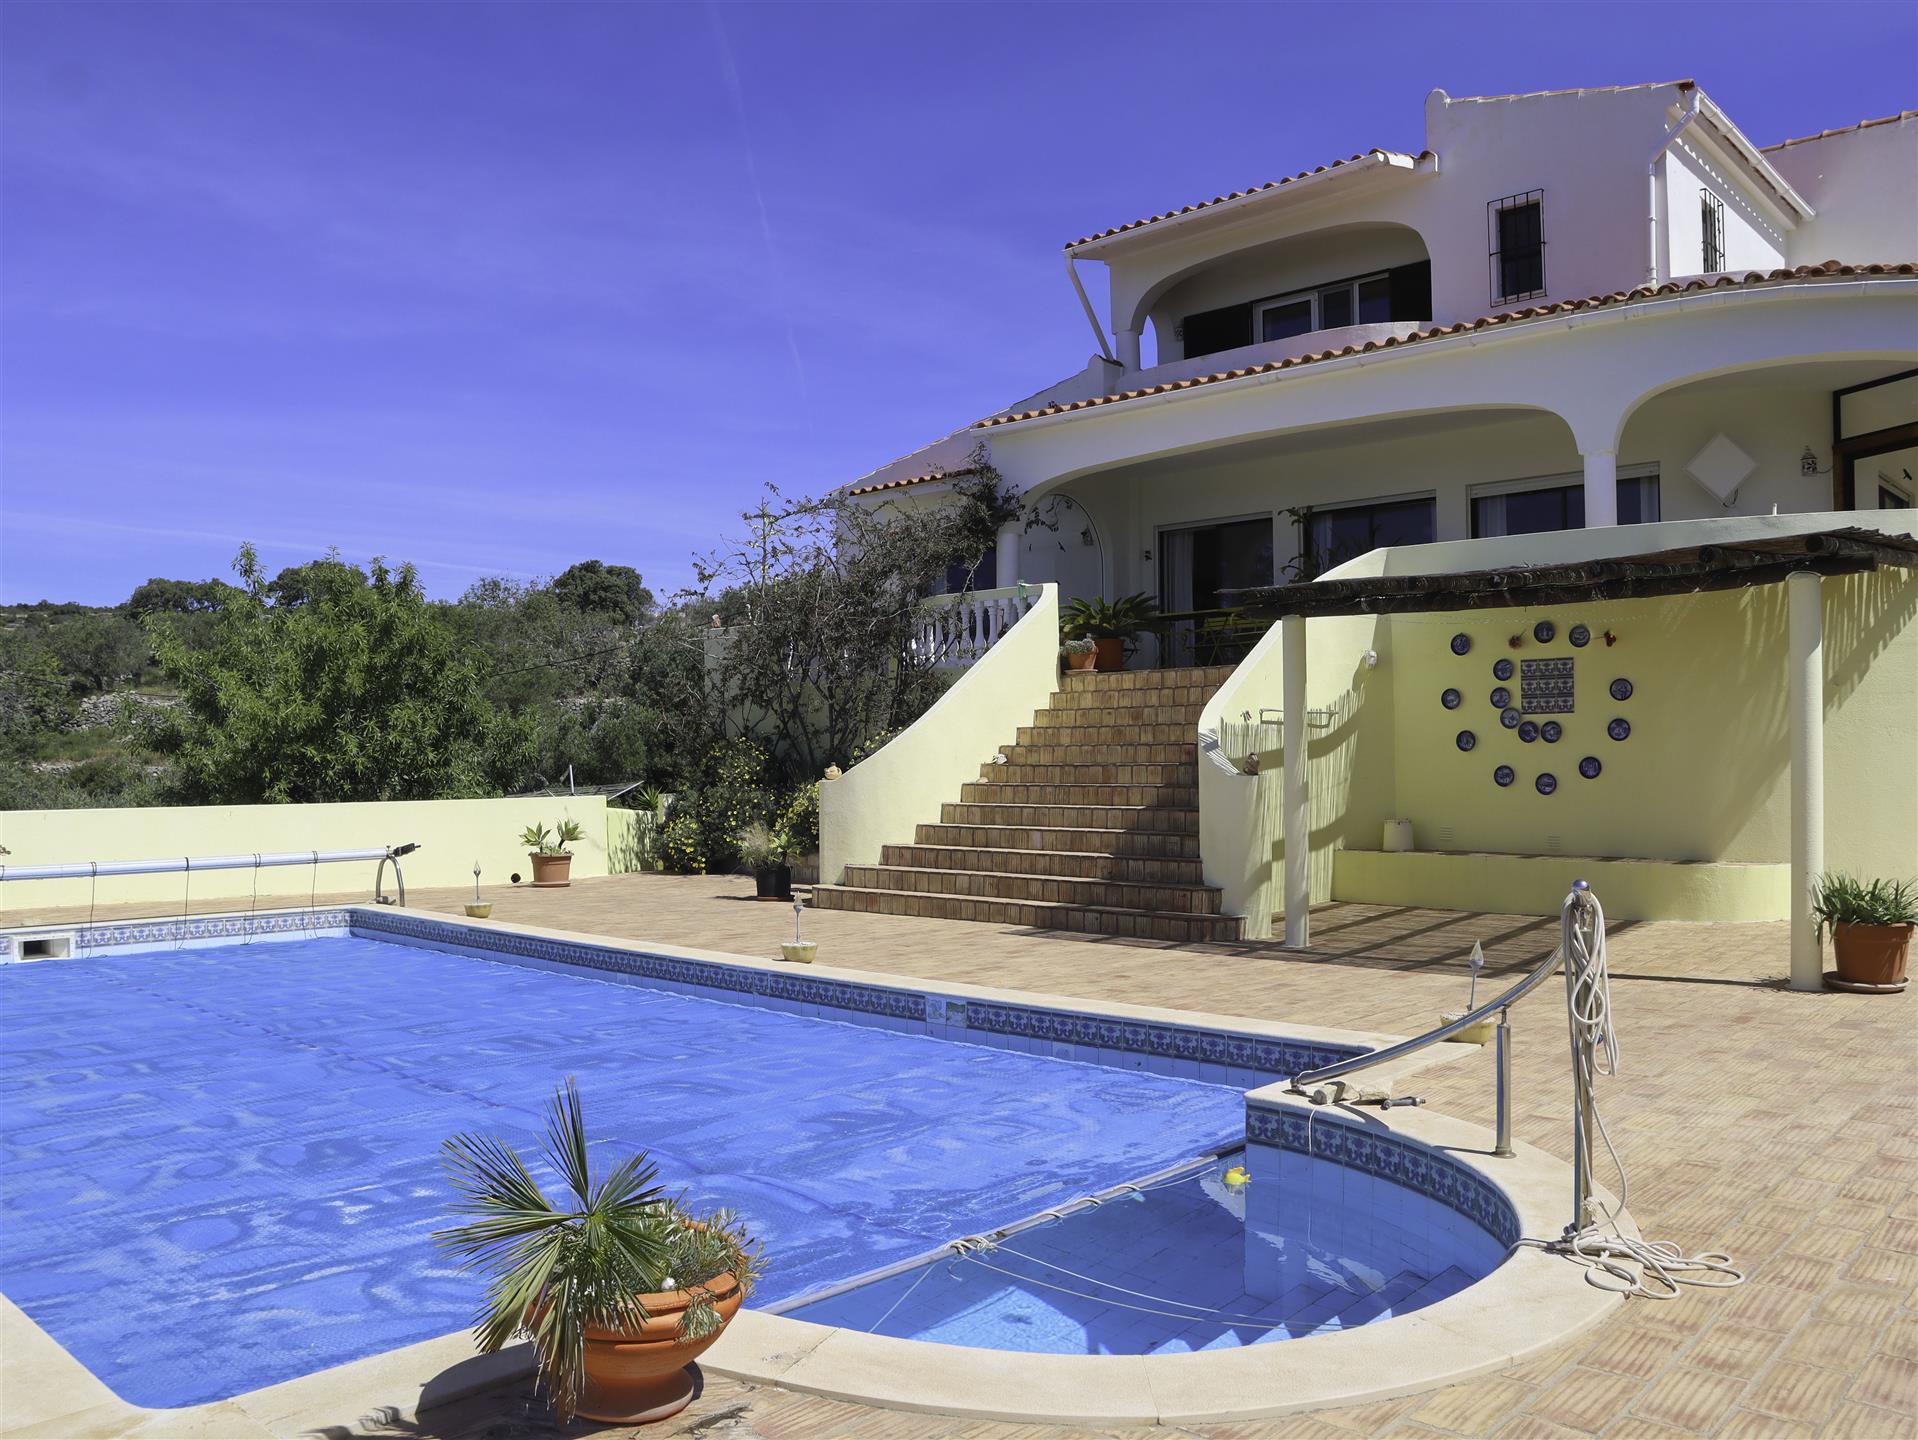 Moradia com 3 quartos - vistas deslumbrantes - Estói - Faro - Algarve